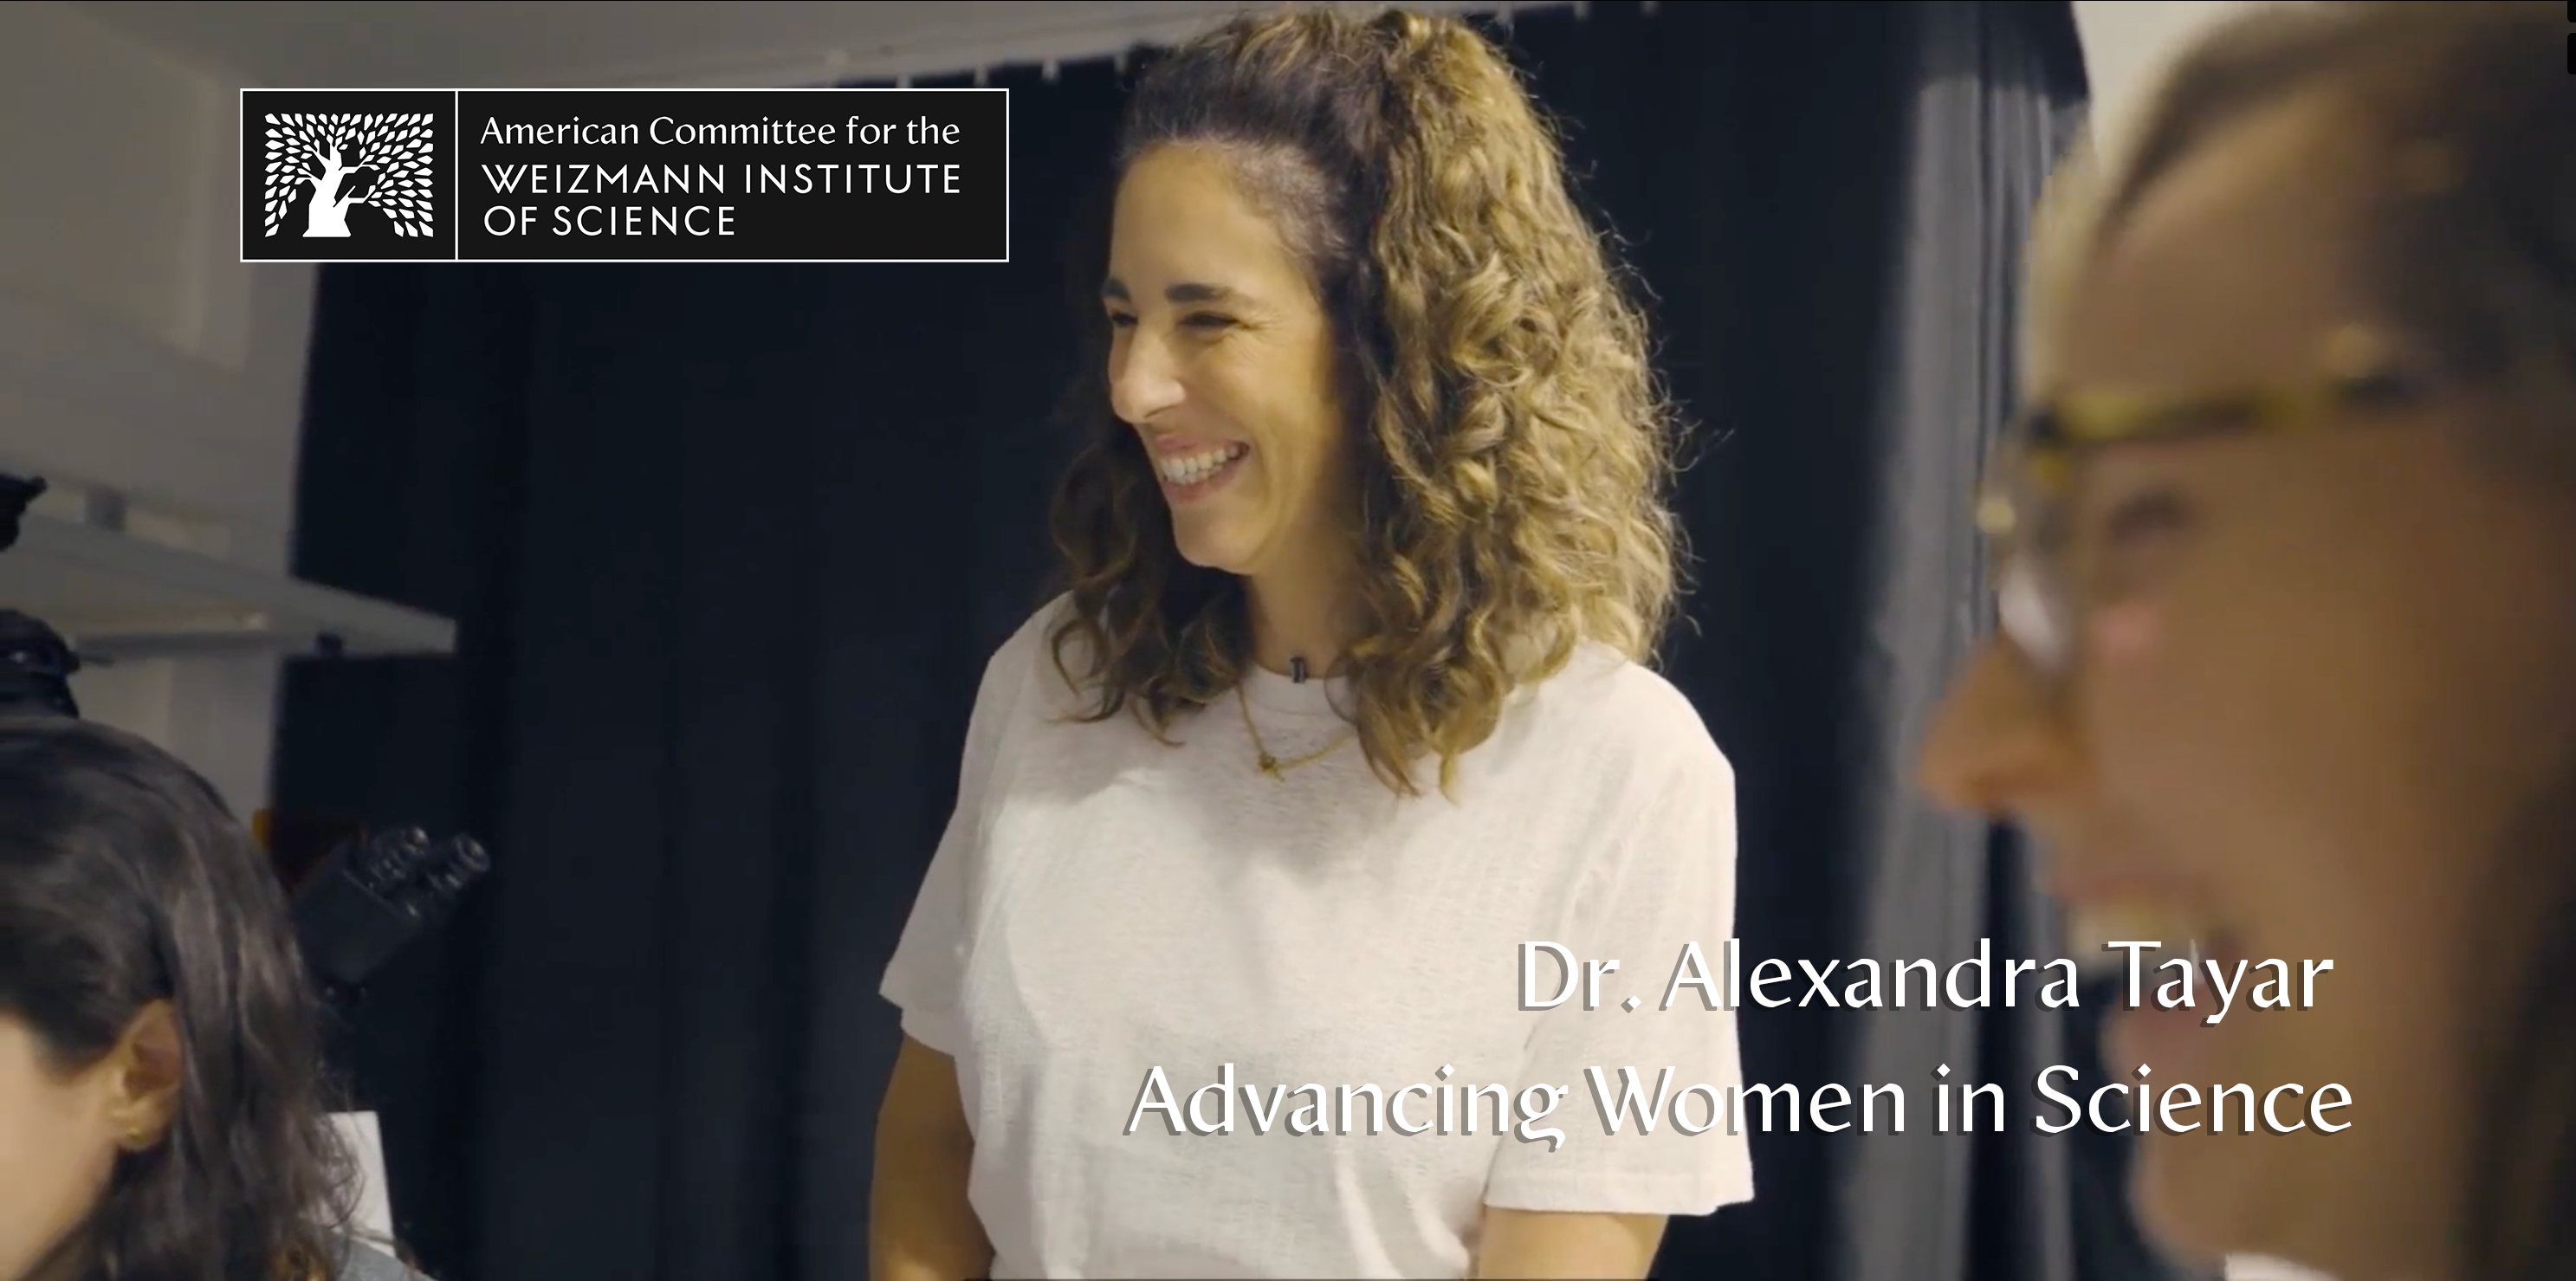 Dr. Alexandra Tayar: Advancing Women in Science